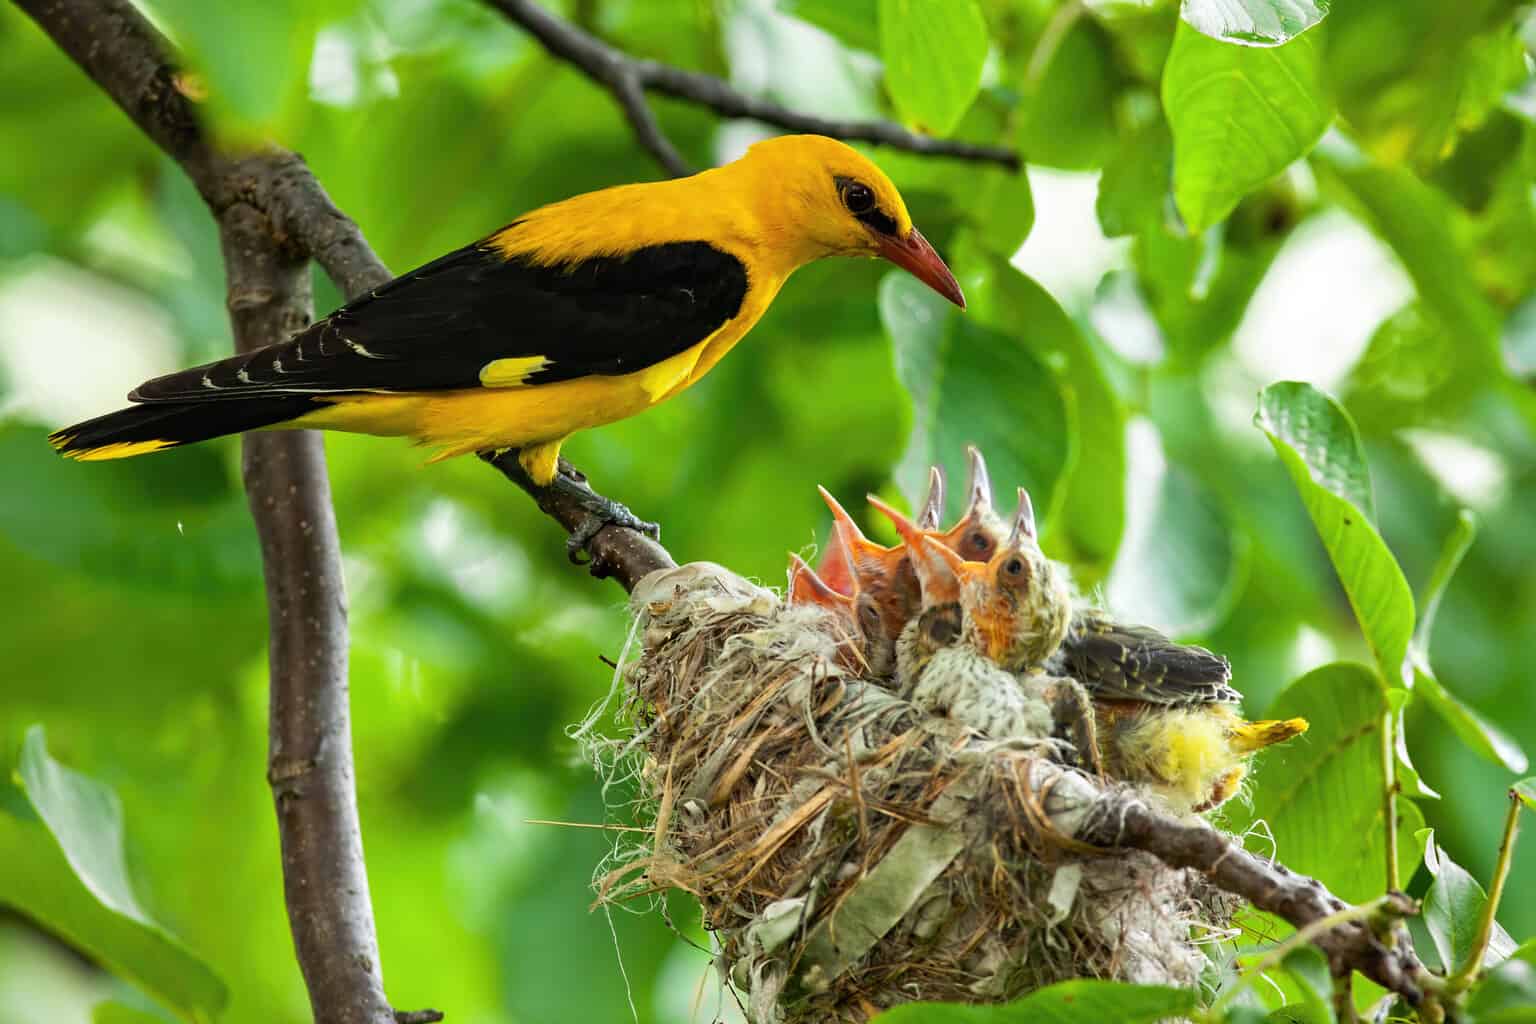 nesting habits of wild birds